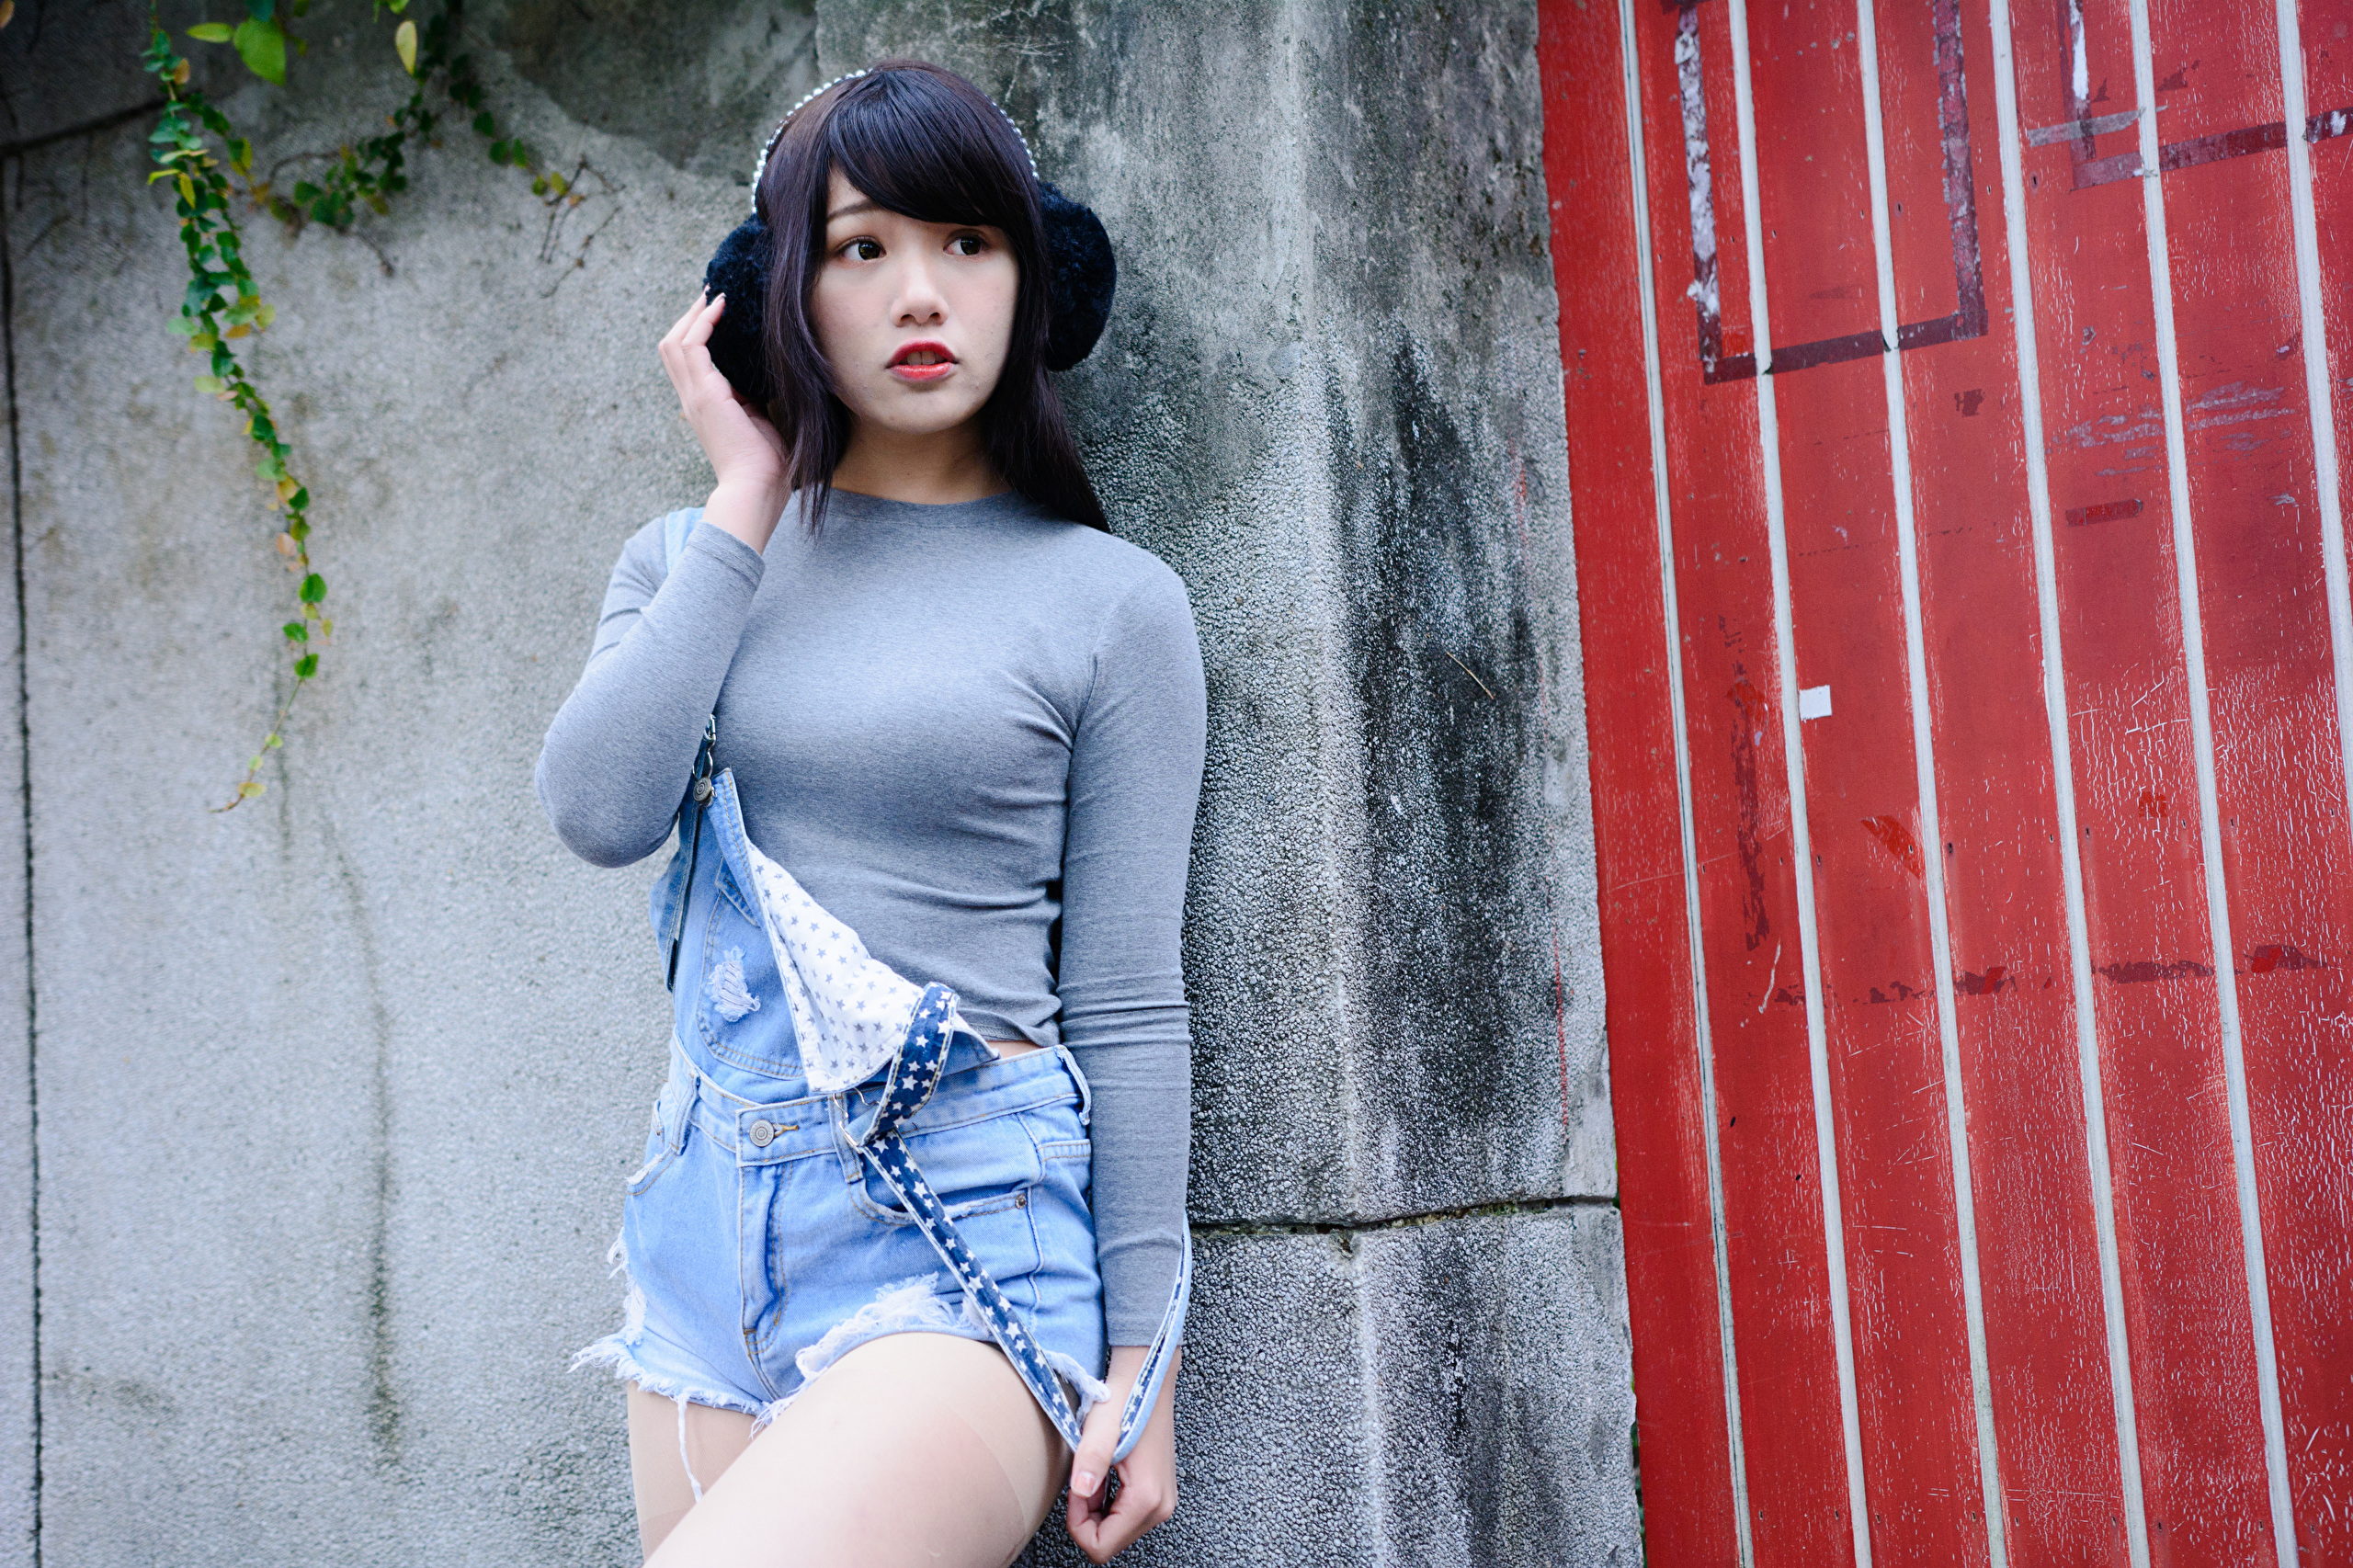 Asian Model Women Long Hair Brunette Ear Muffs Jeans Dresses Long Sleeves Leaning Wall Door Ivy Vick 2560x1706